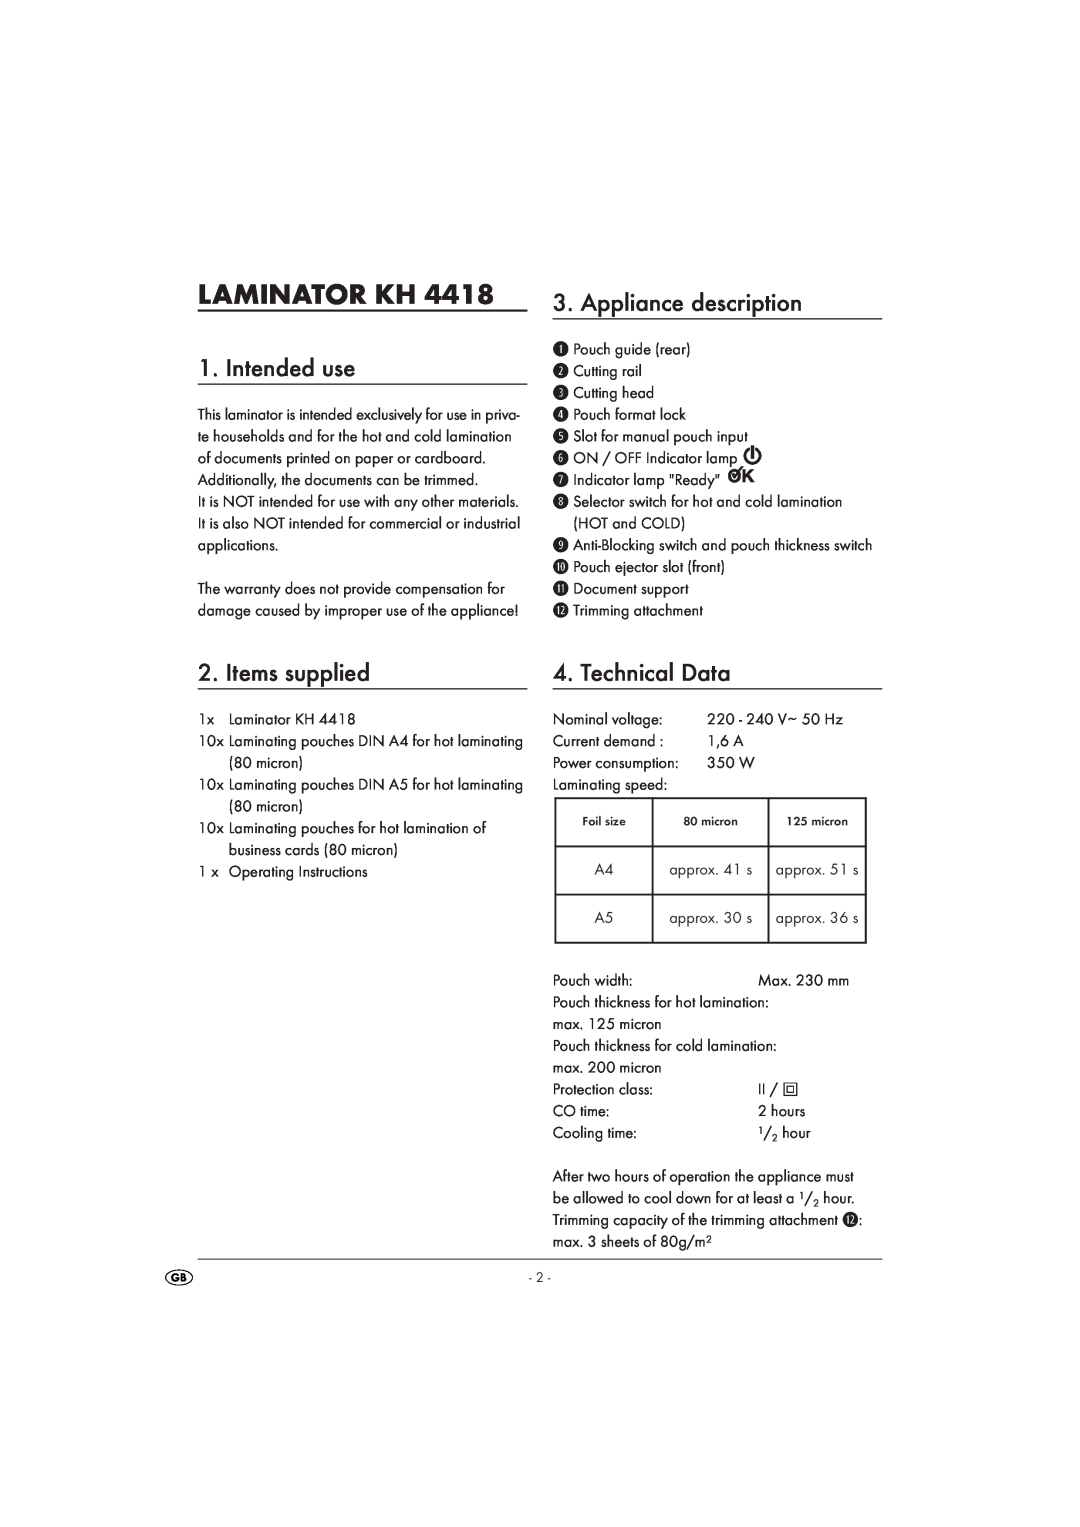 Kompernass KH 4418 manual Laminator Kh, Intended use, Appliance description, Items supplied, Technical Data 